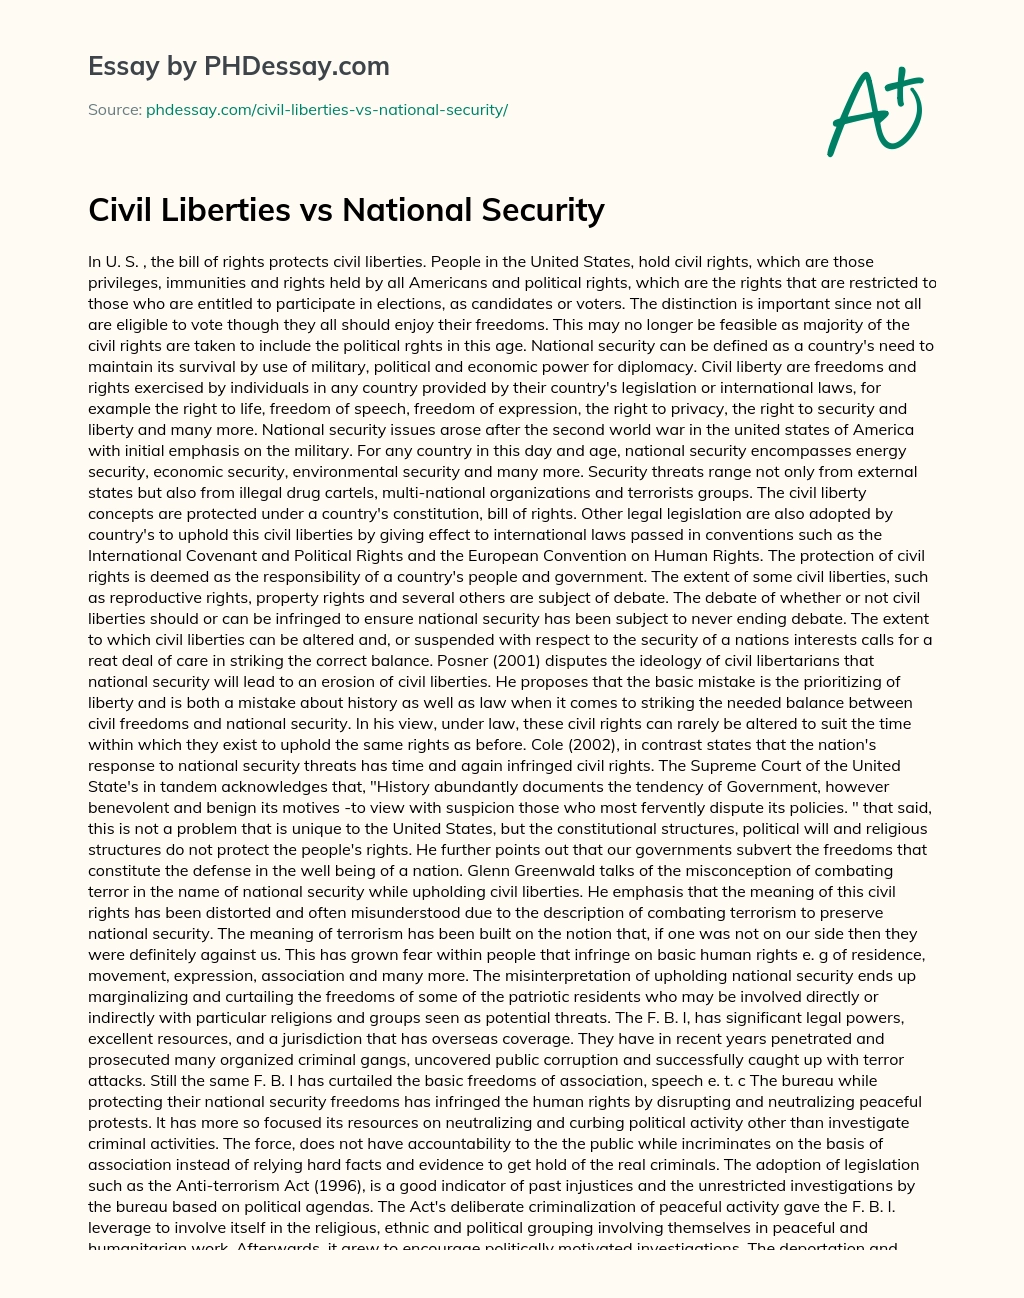 Civil Liberties vs National Security essay